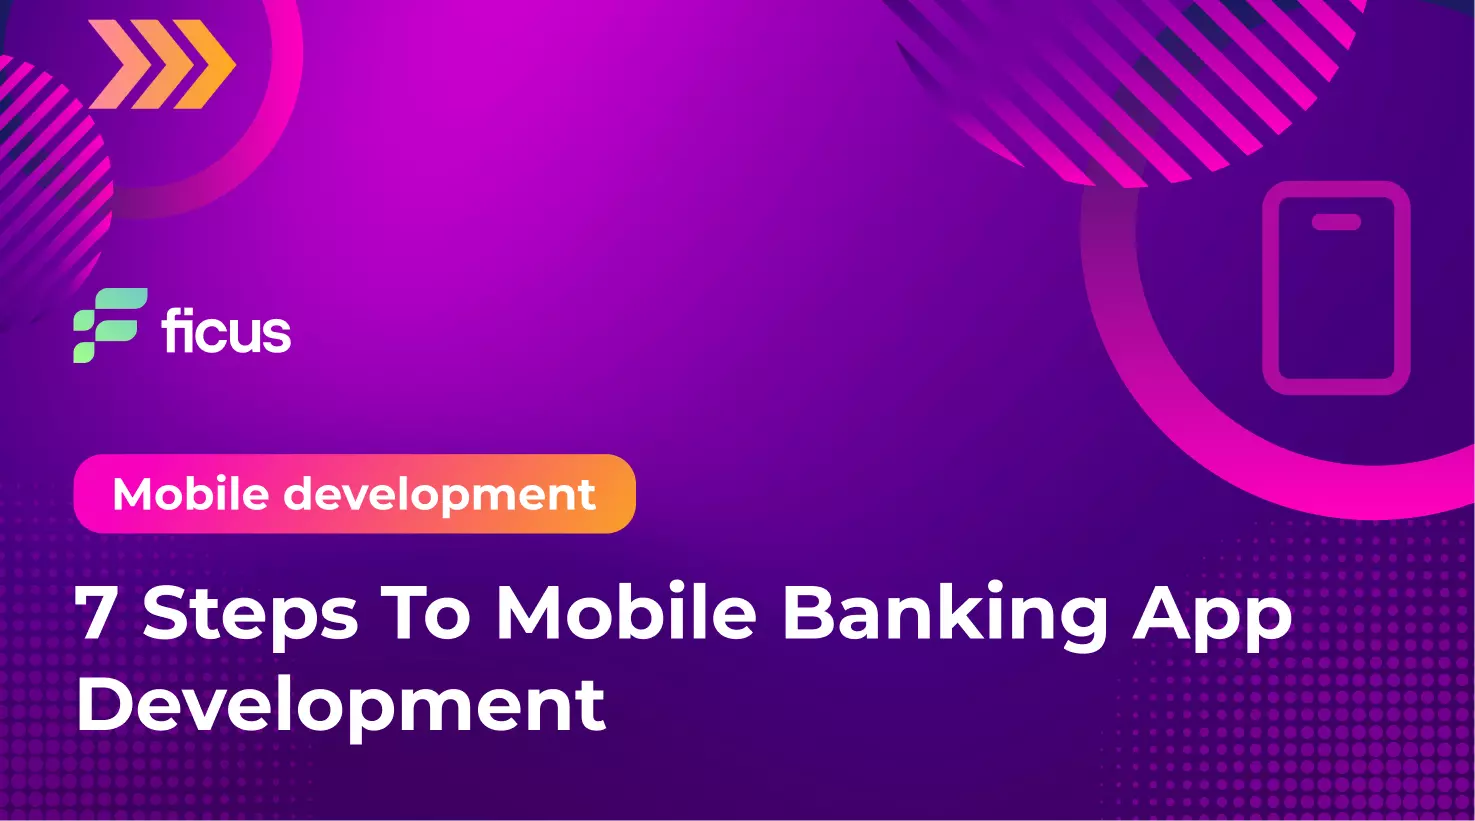 5_7 Steps To Mobile Banking App Development